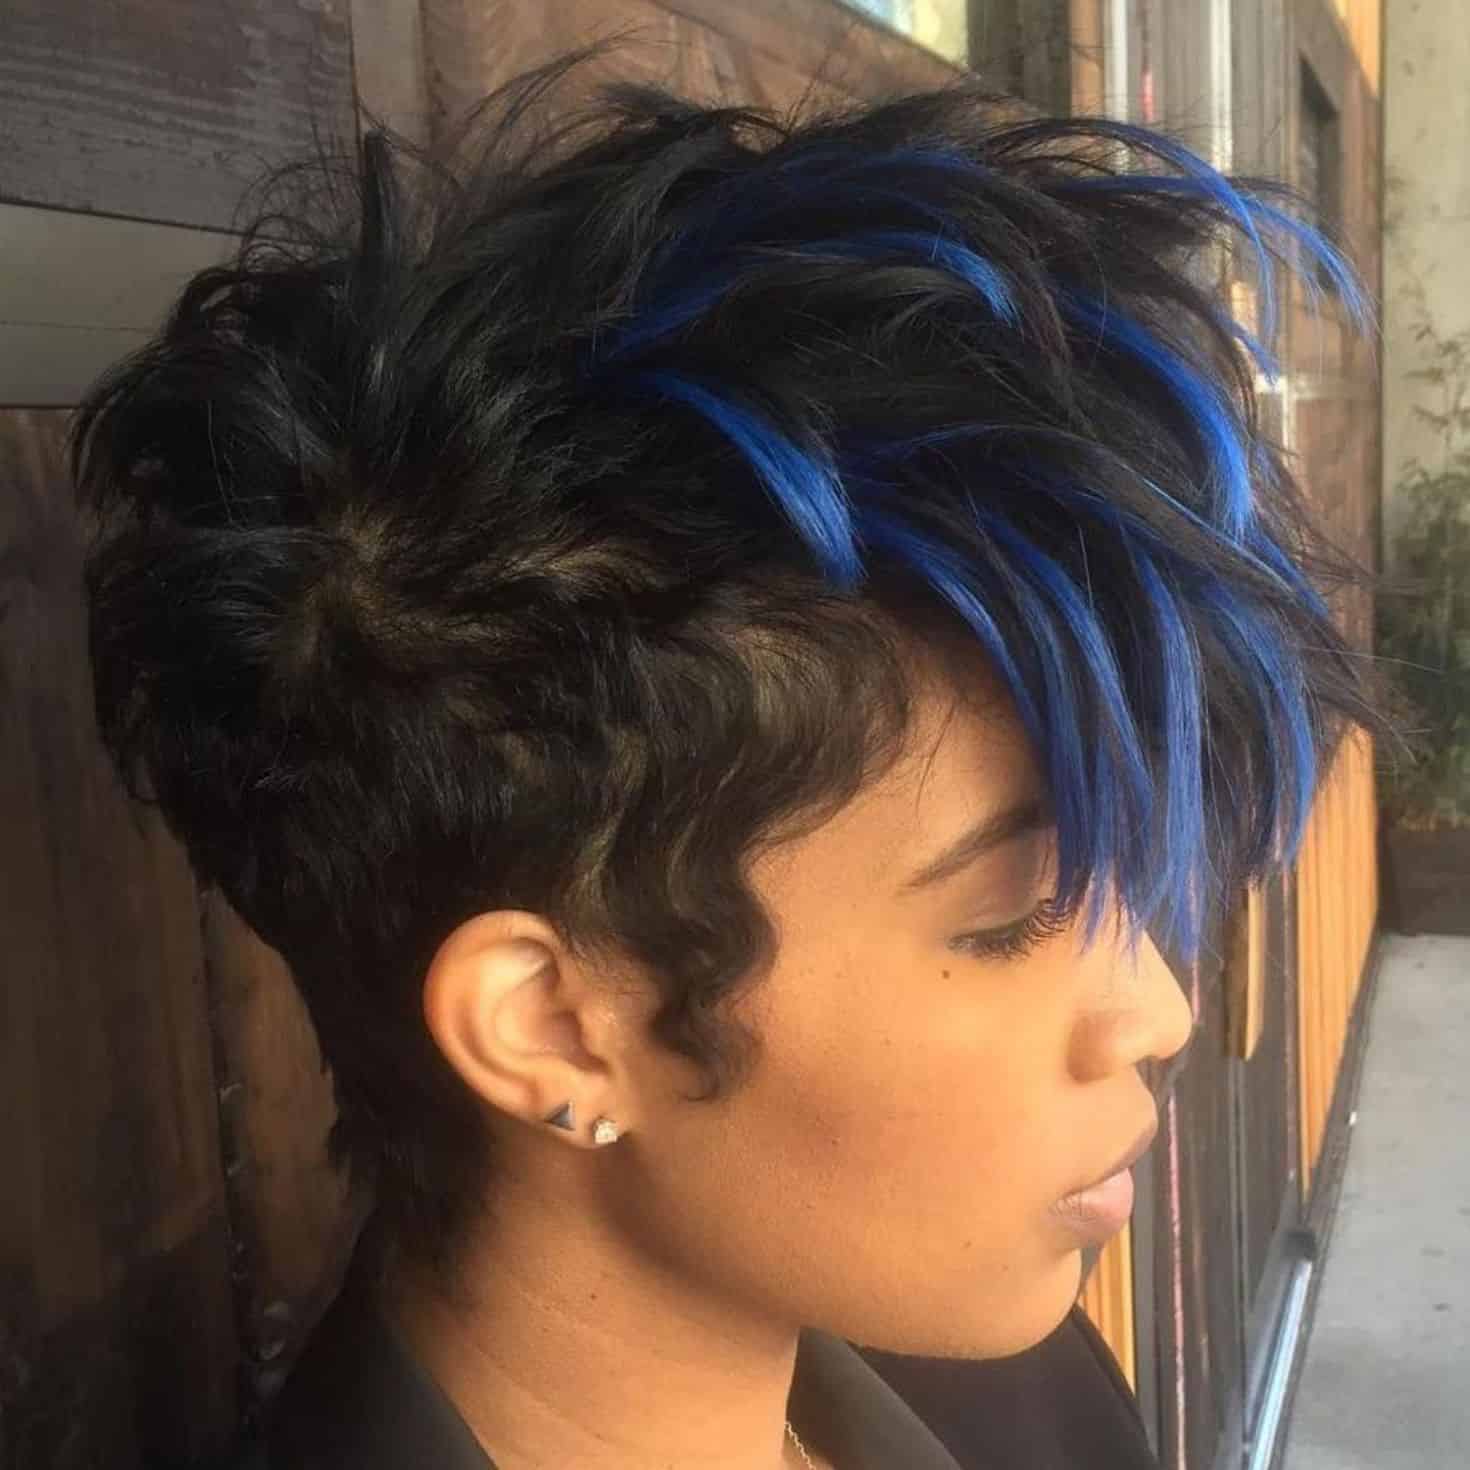 50+ Short Hairstyles For Black Women: 2022 Favorite Looks - Tattooed Martha